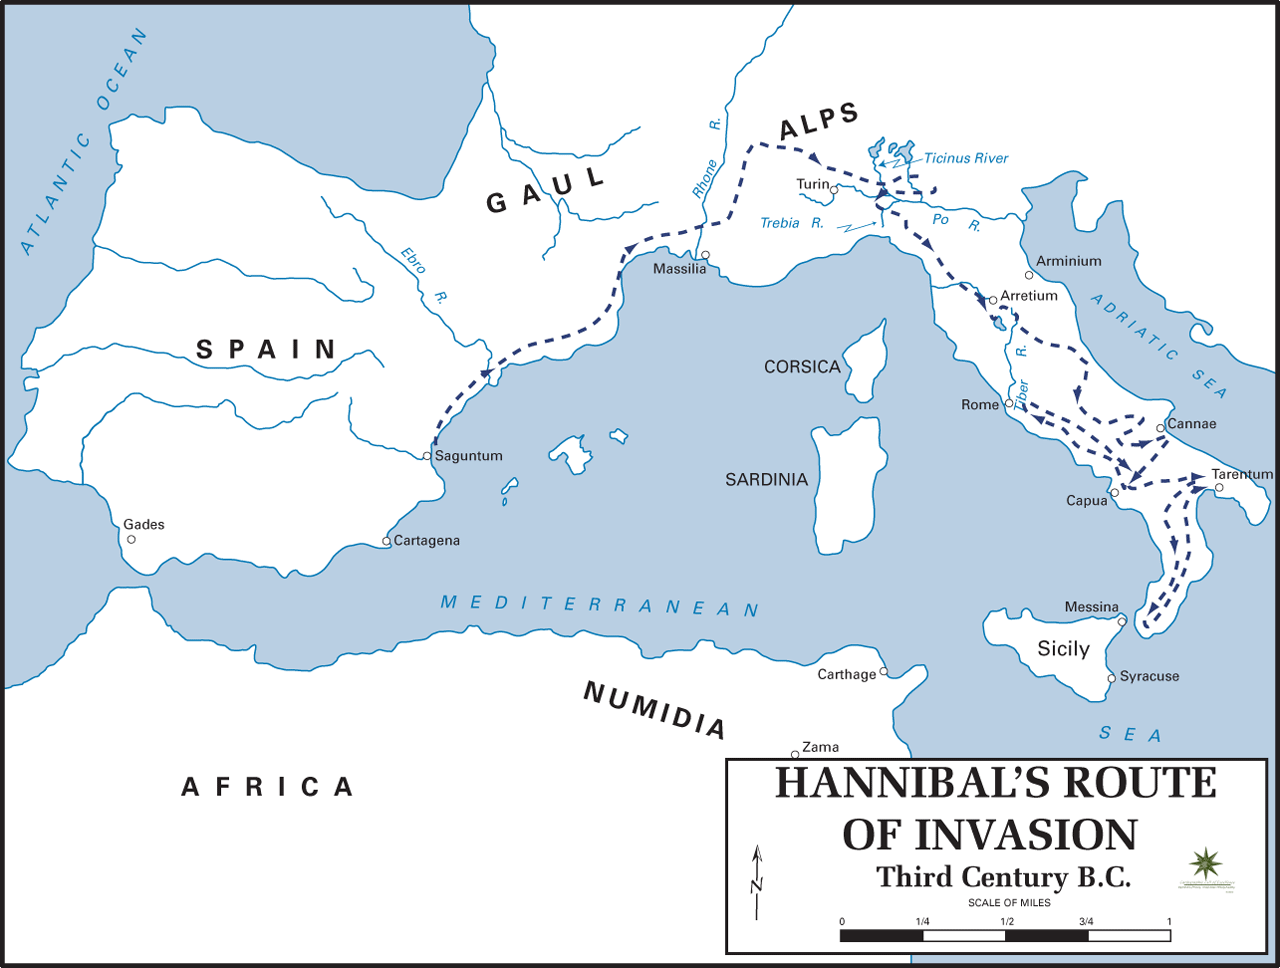 Second Punic War - Hannibals Invasion Route